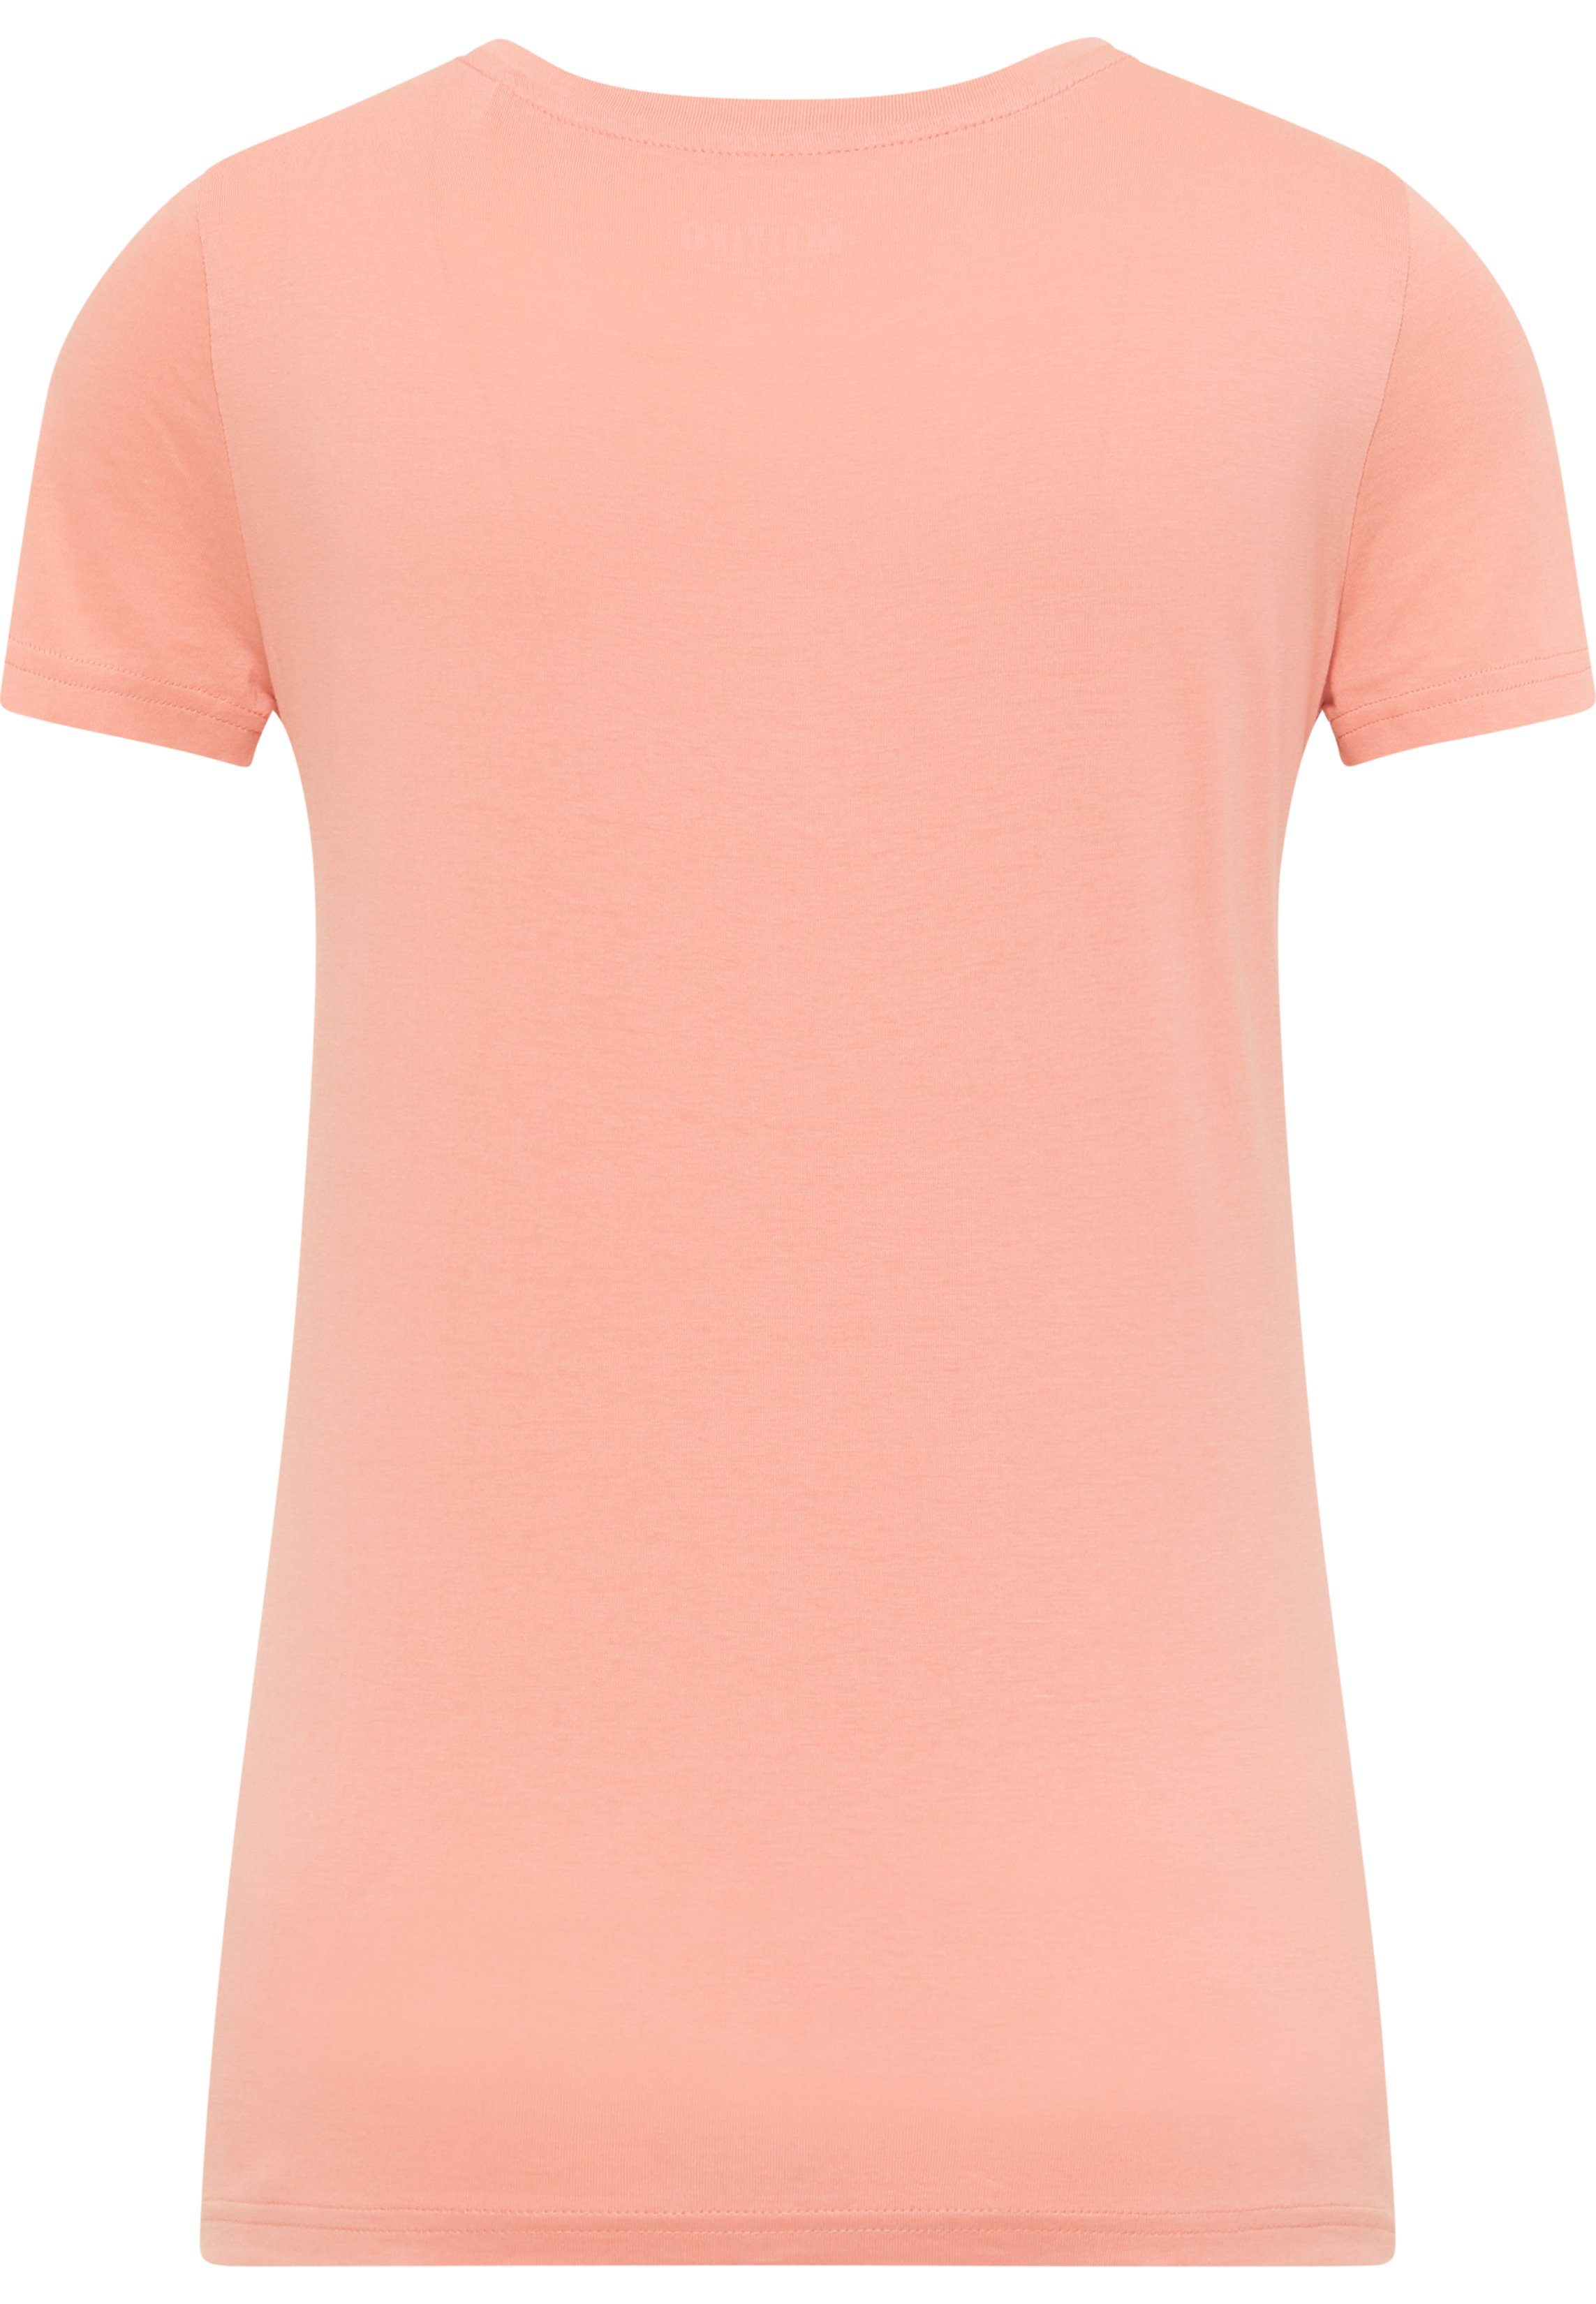 C pink MUSTANG T-Shirt Print Alexia